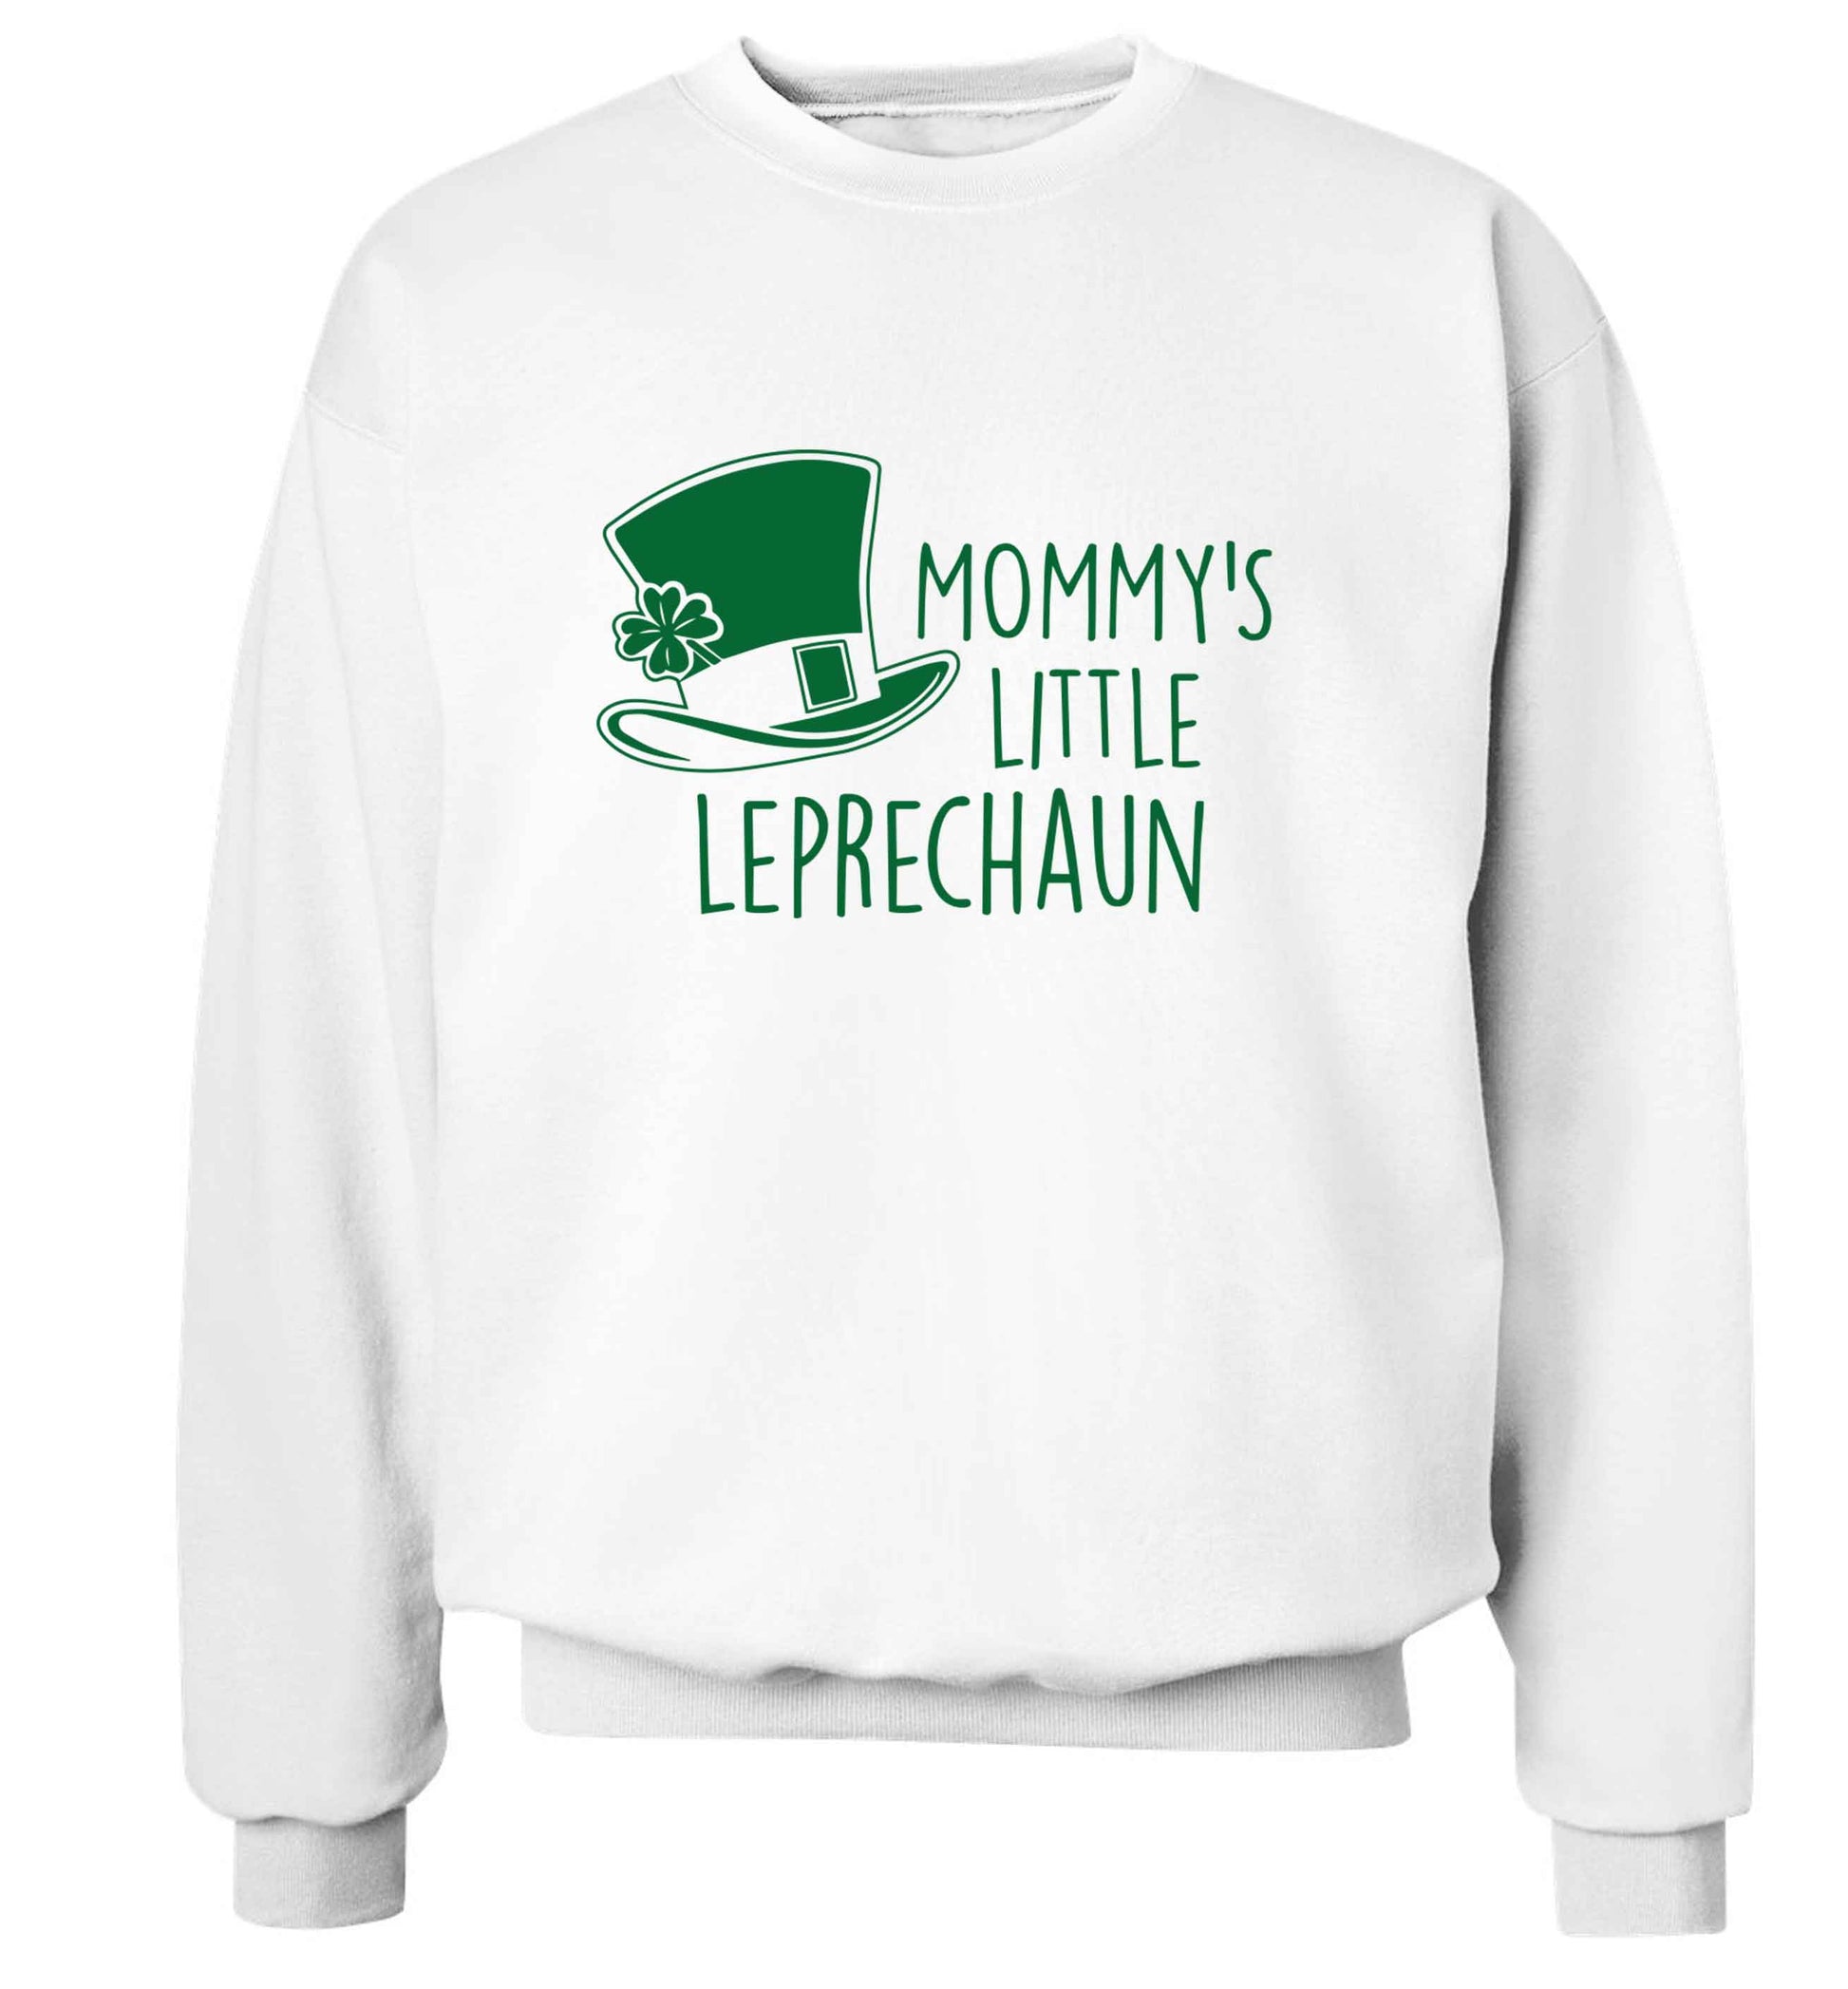 Mommy's little leprechaun adult's unisex white sweater 2XL